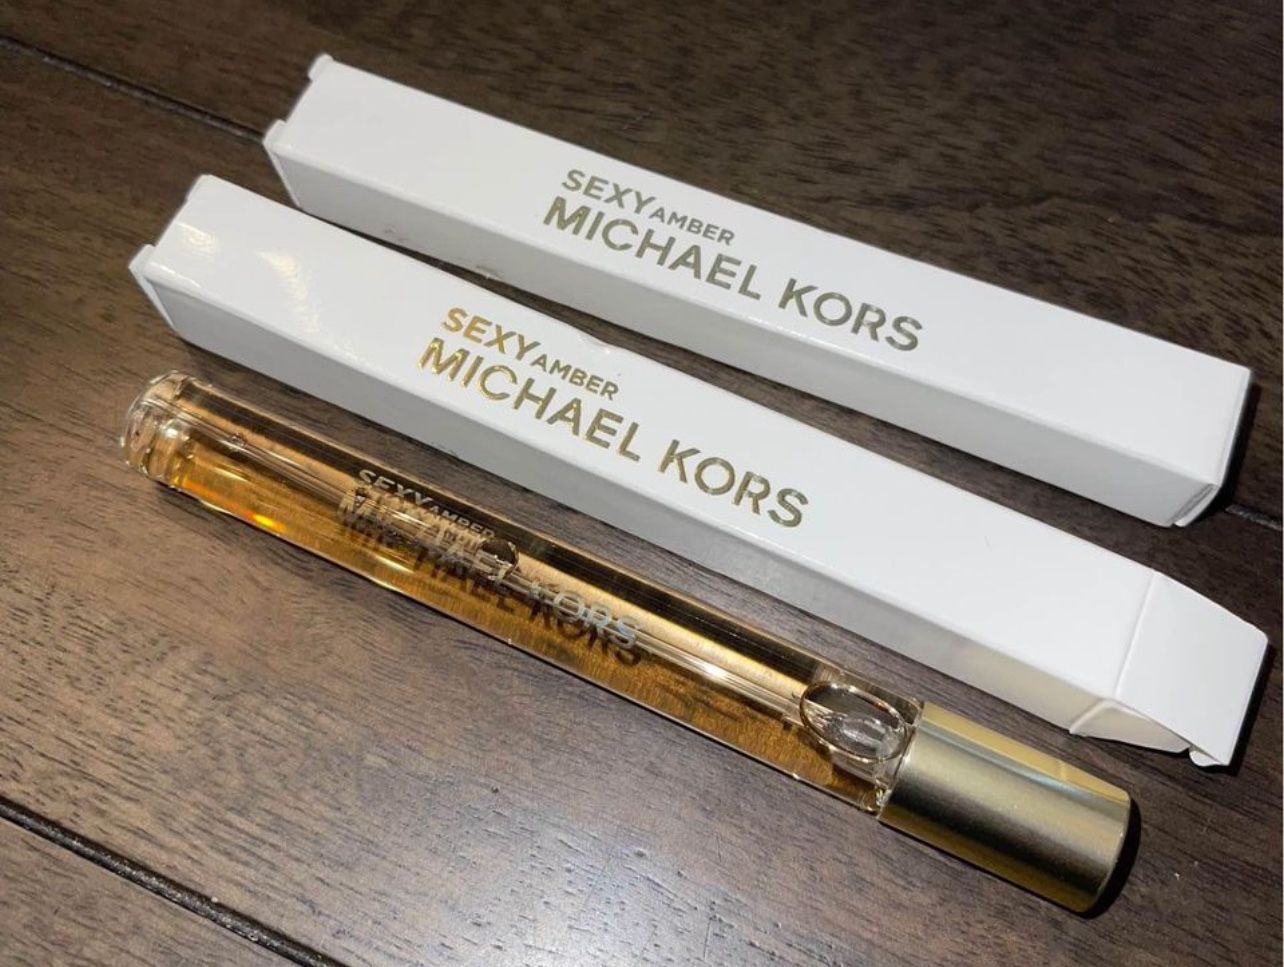 Michael Kors sexy amber Perfume